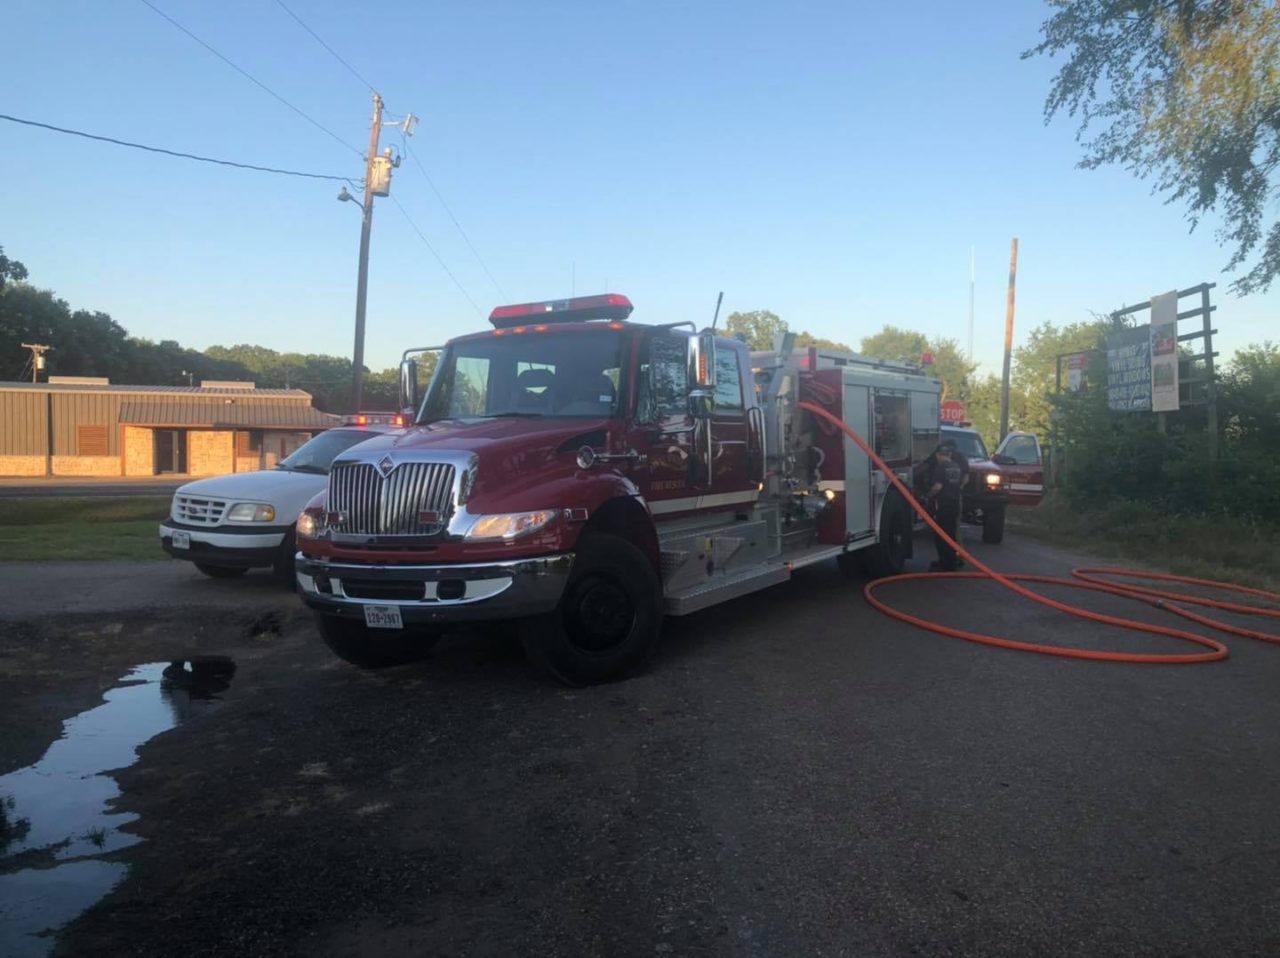 Payne Springs Fire Rescue